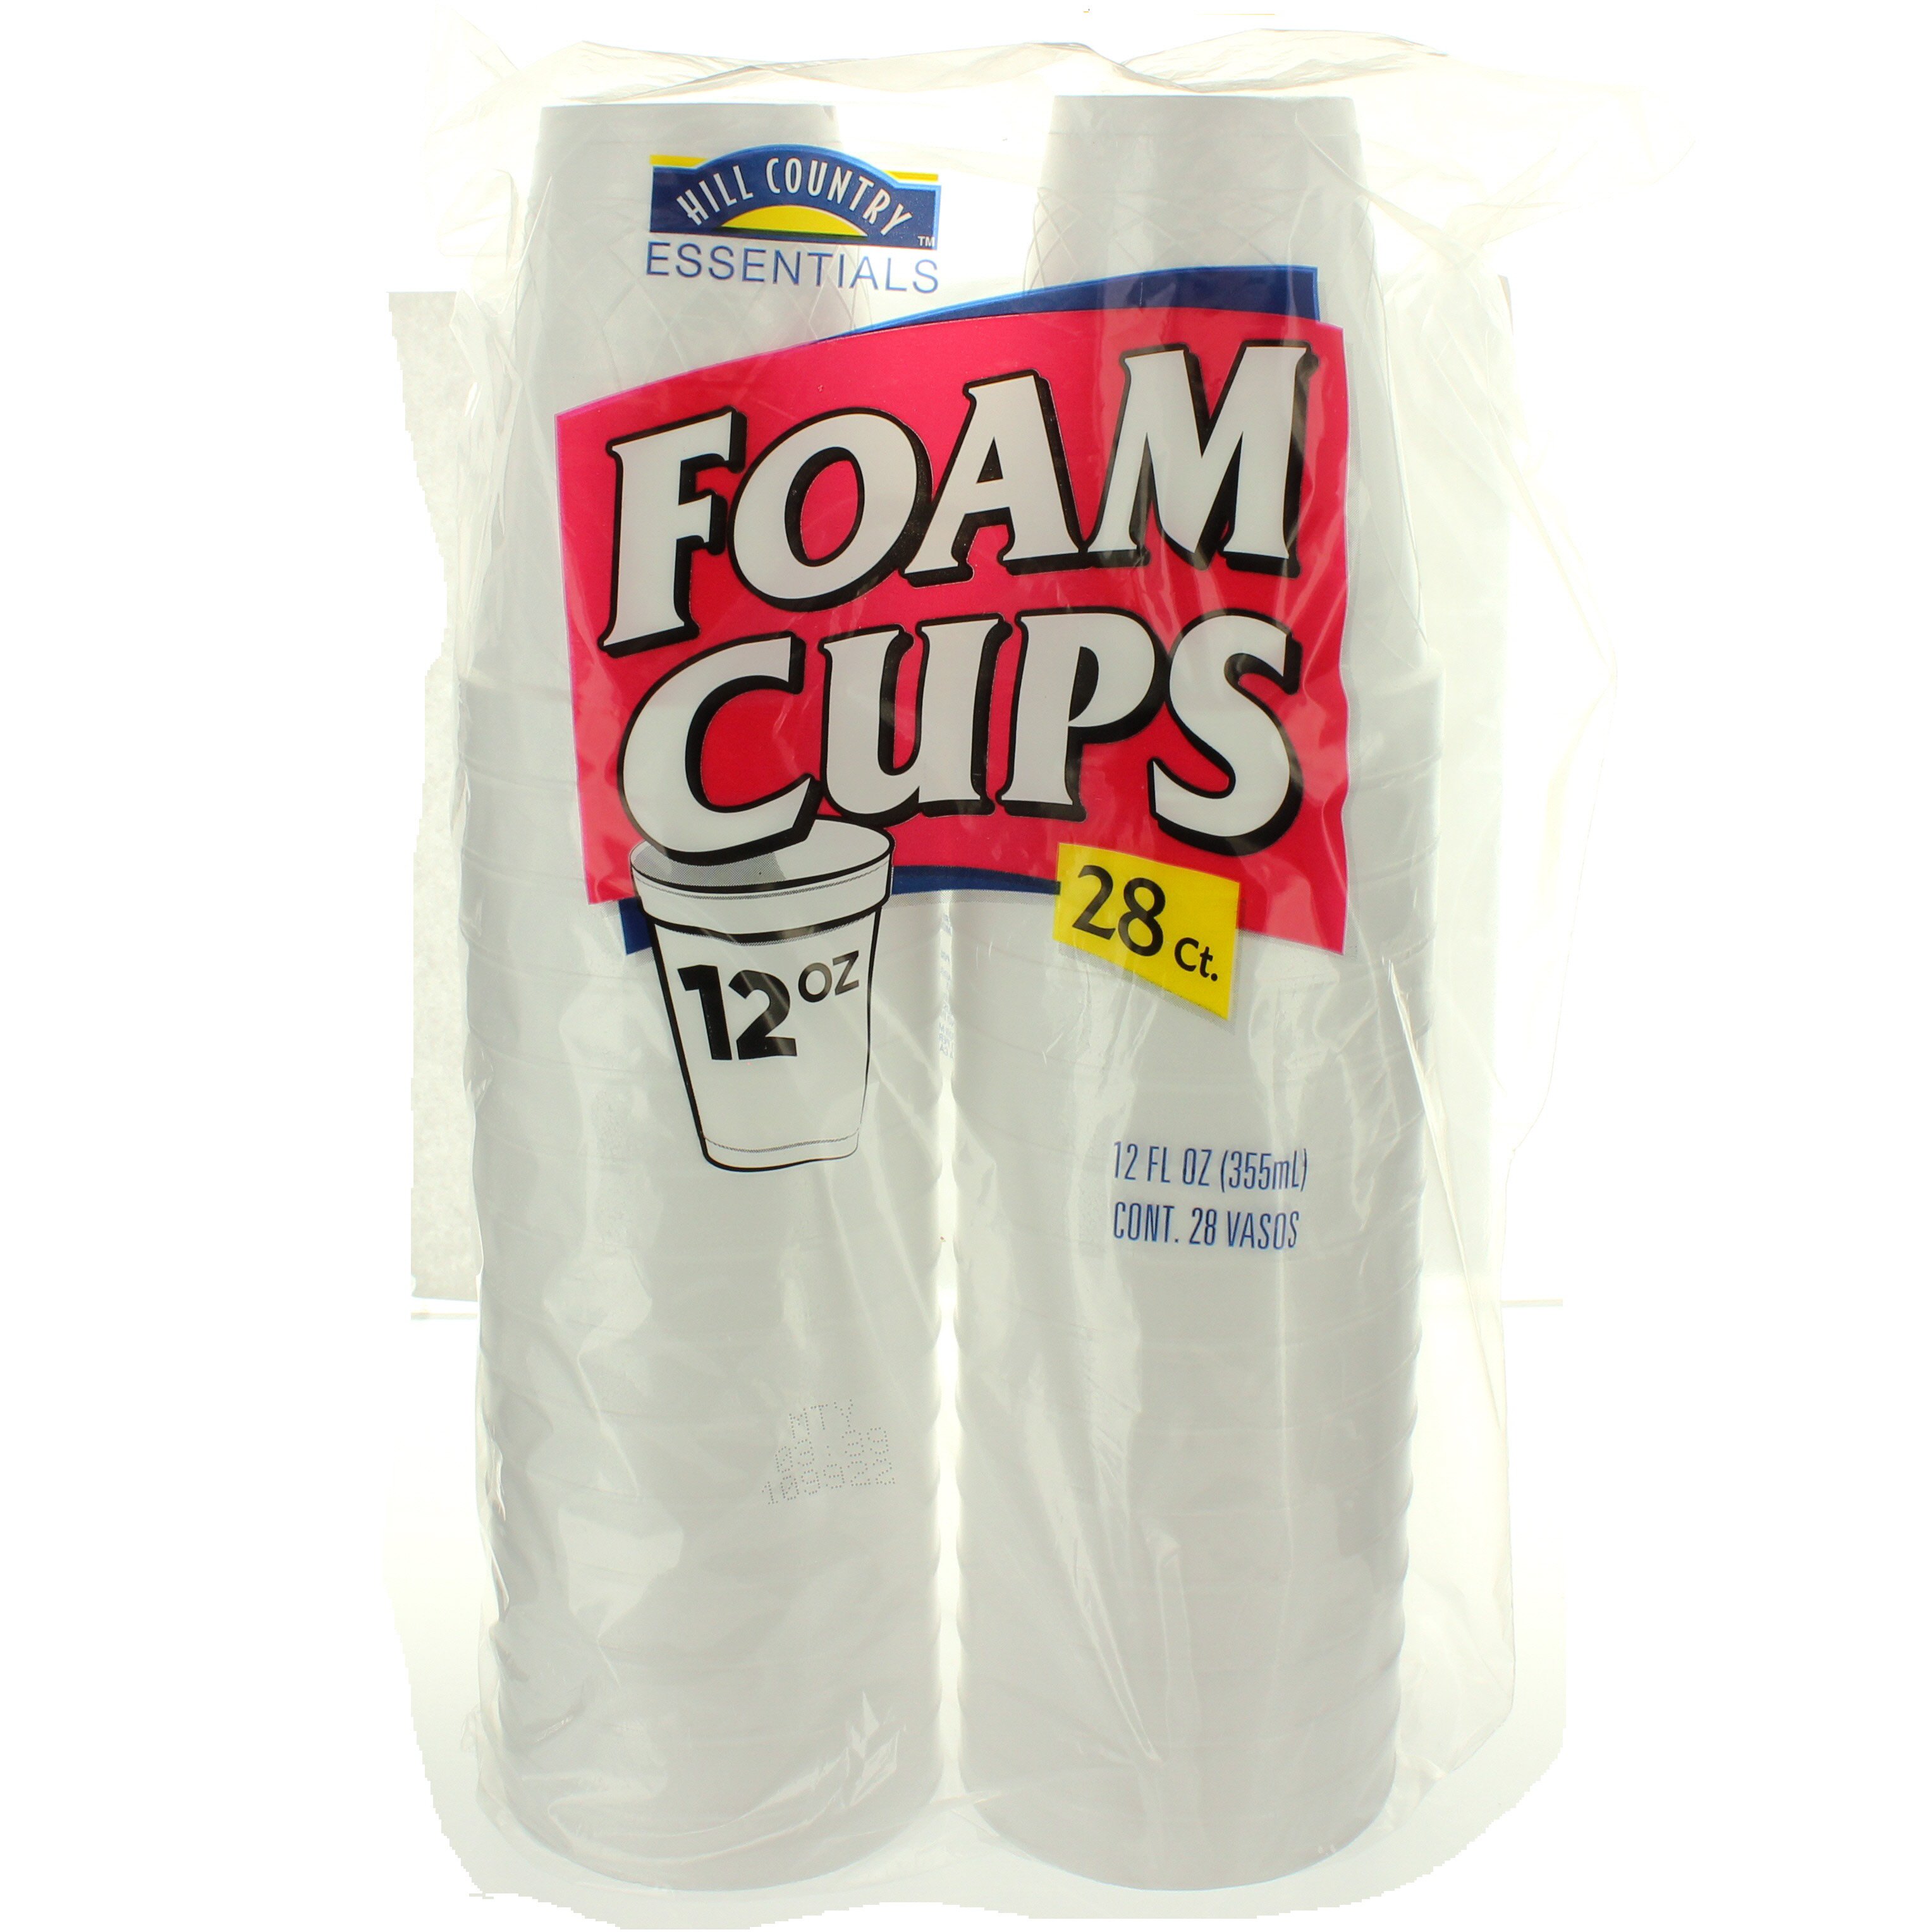 Styrofoam Cups (12 oz.) - 25 Count - Hanson Beverage Service